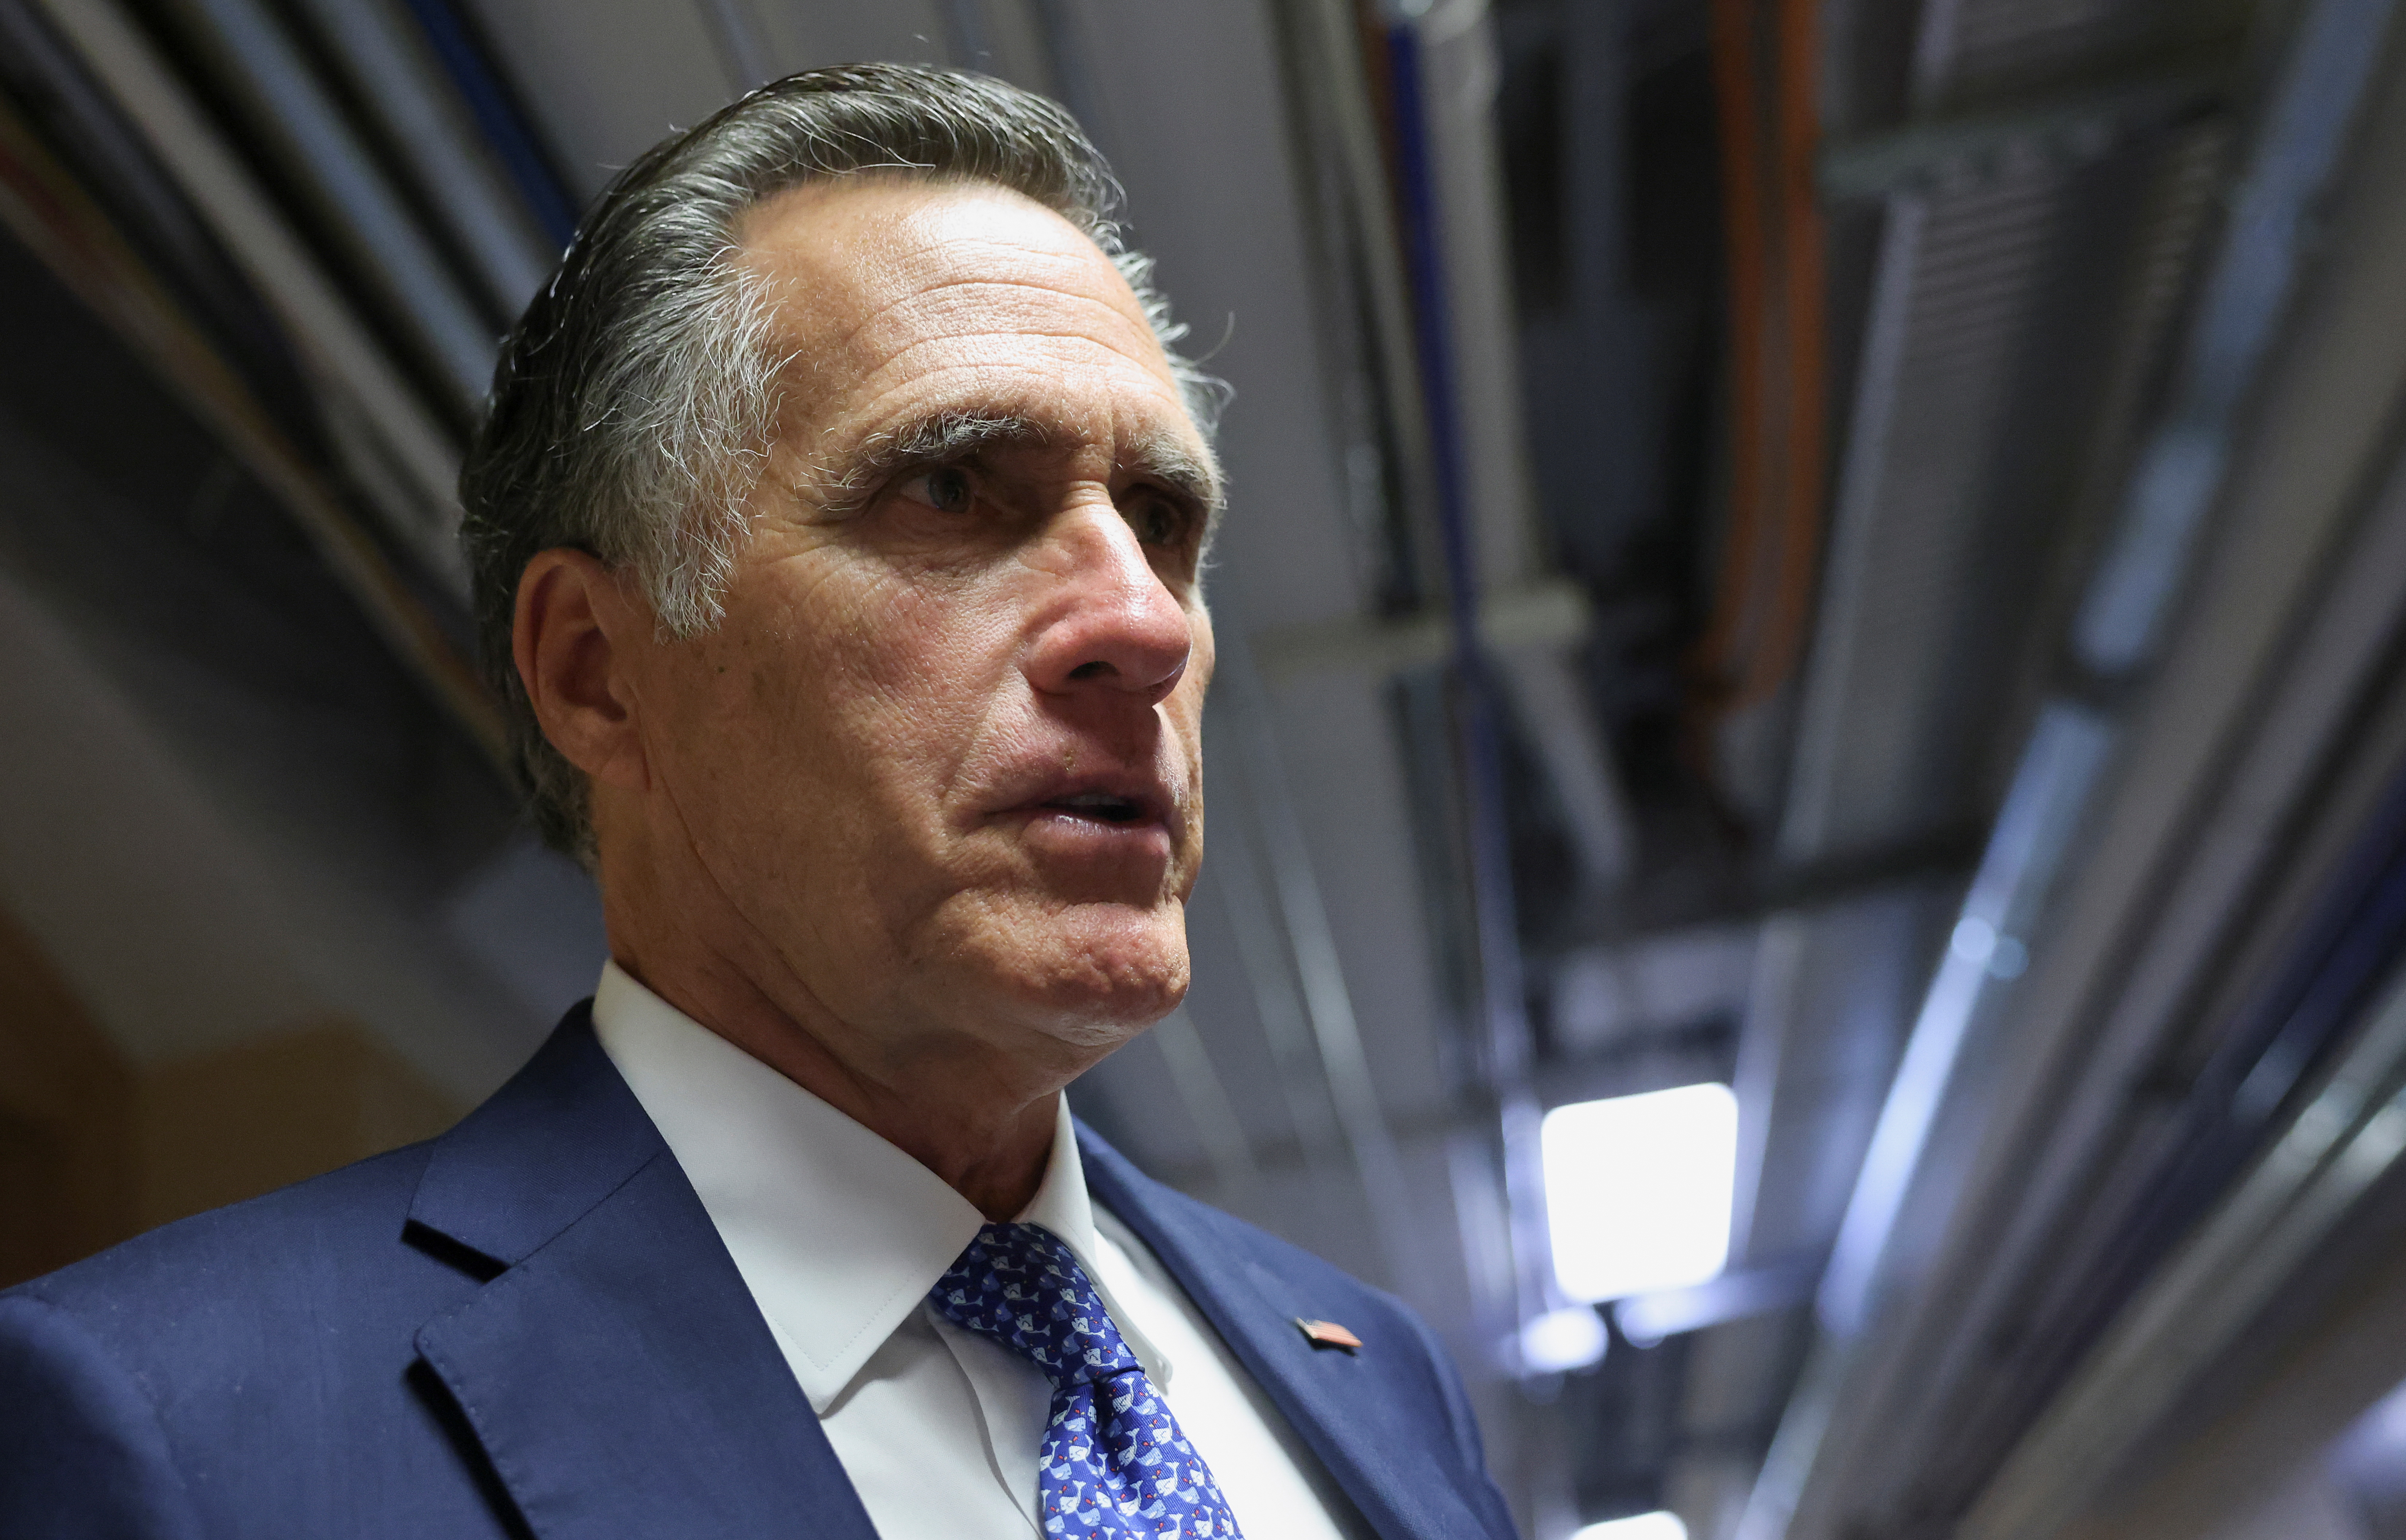 U.S. Senator Mitt Romney departs after bipartisan work group meeting on infrastructure legislation at the U.S. Capitol in Washington